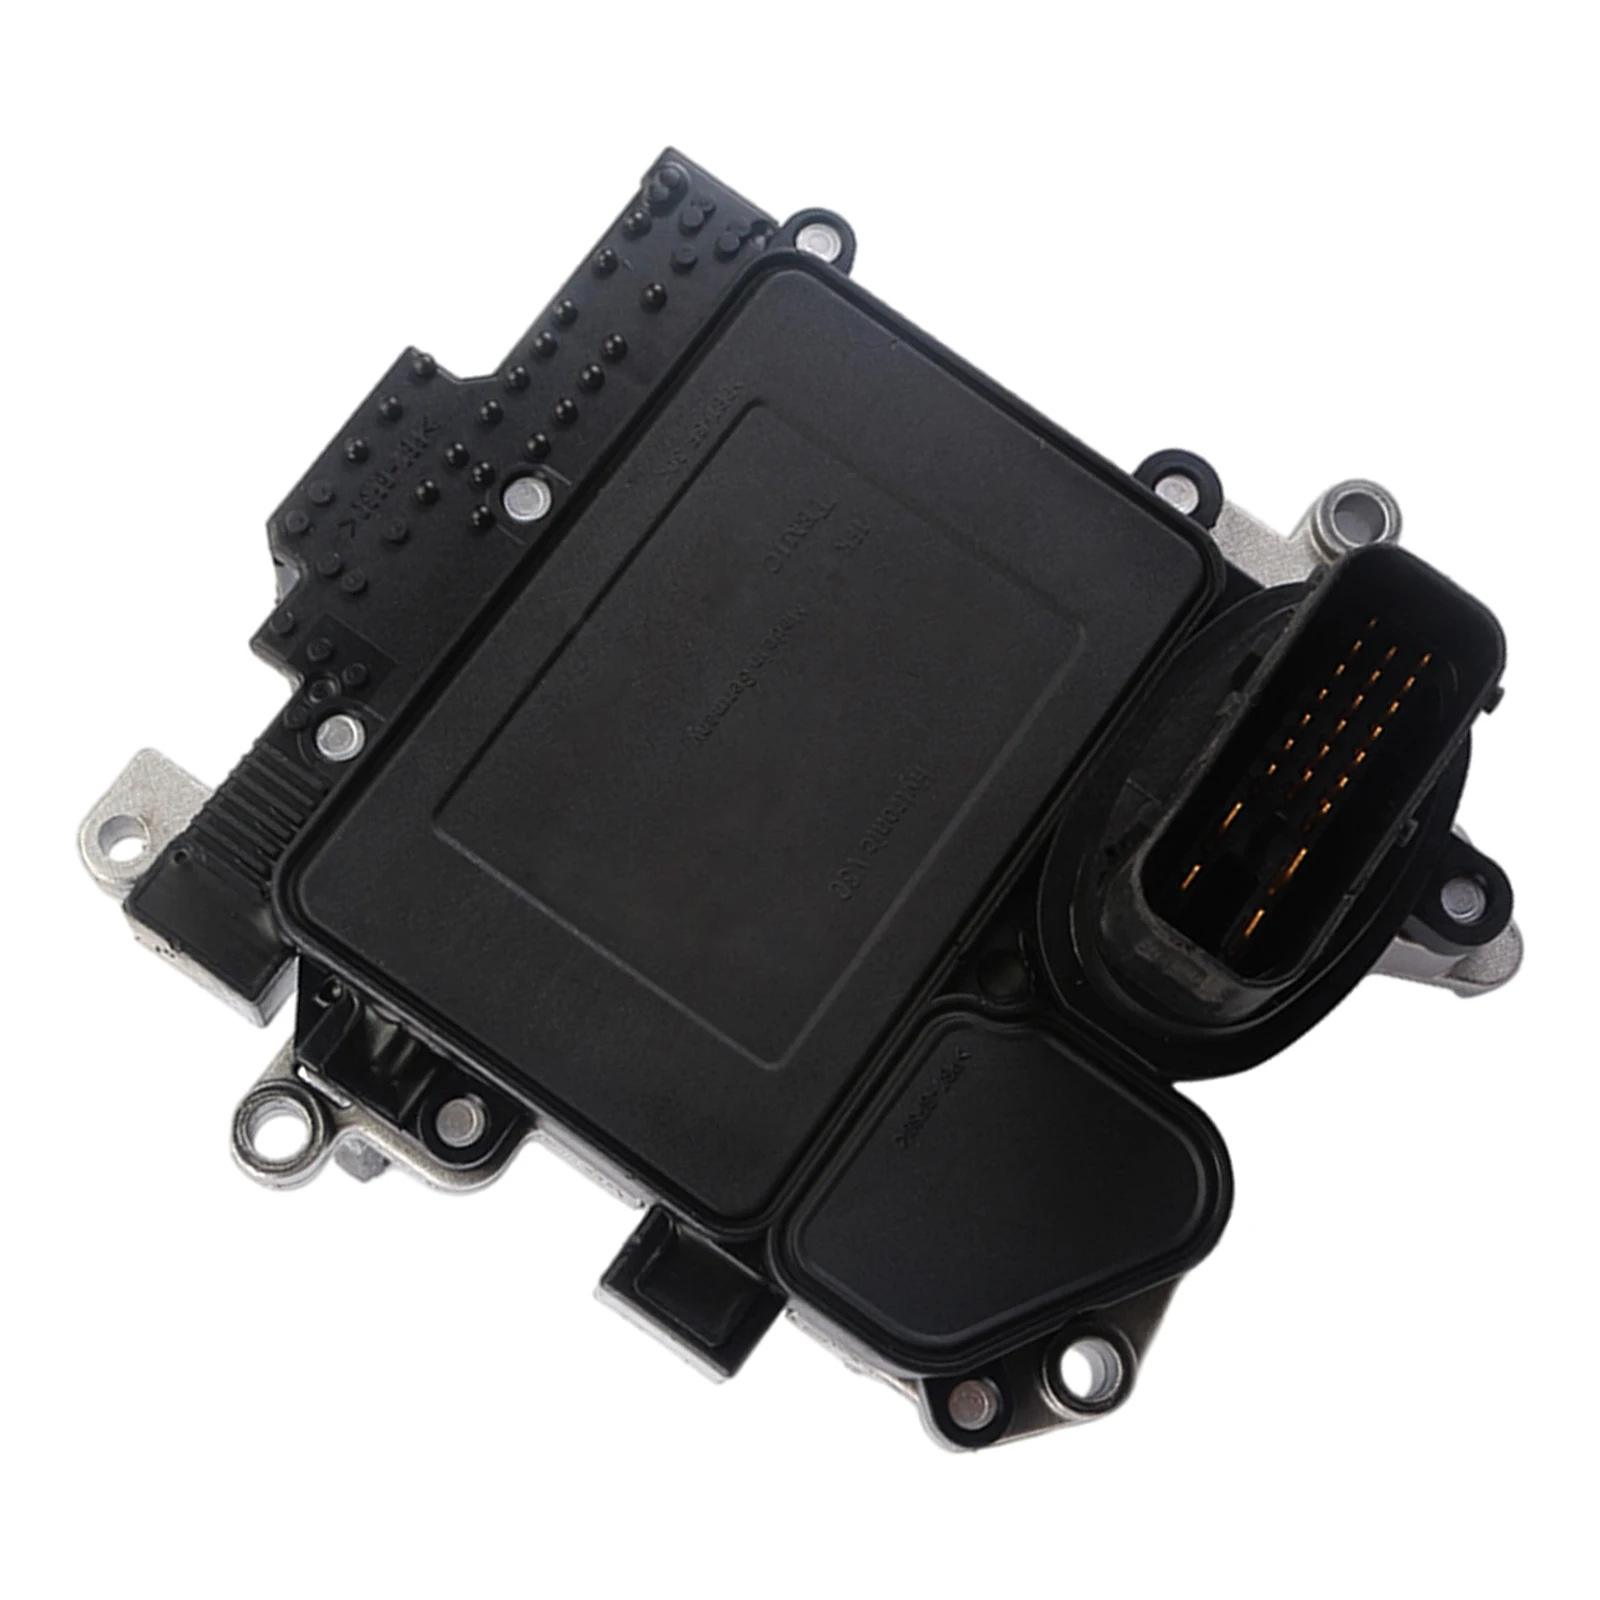 01J CVT Transmission Control Module Plate TCU TCM for Audi A4 A5 A6 A8 Made of quality material for maximum durability.